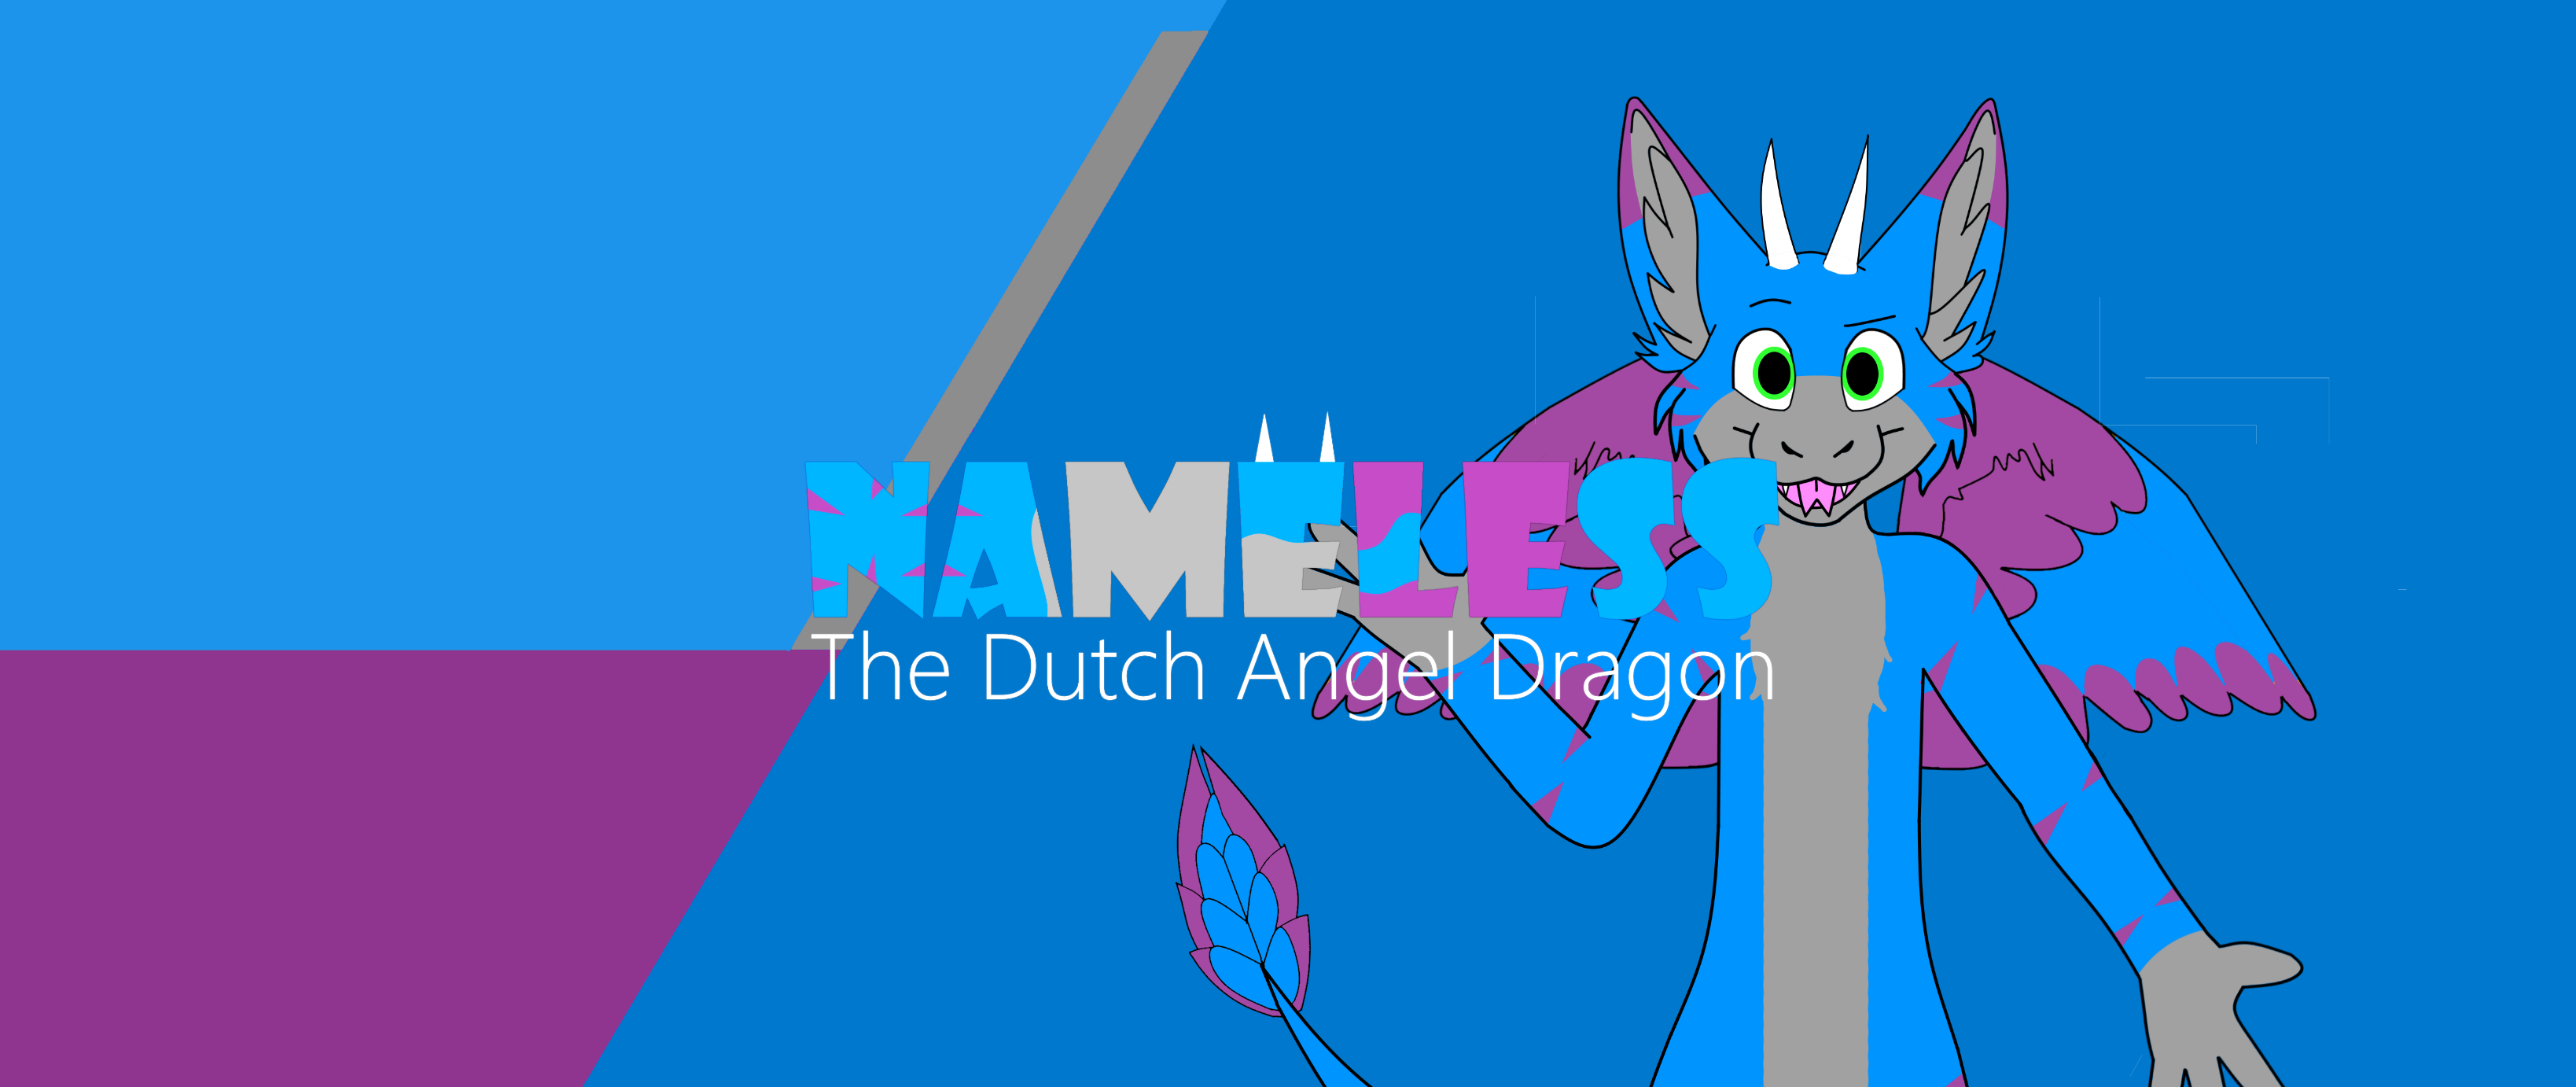 Nameless The Dutch Angel Dragon Wallpaper